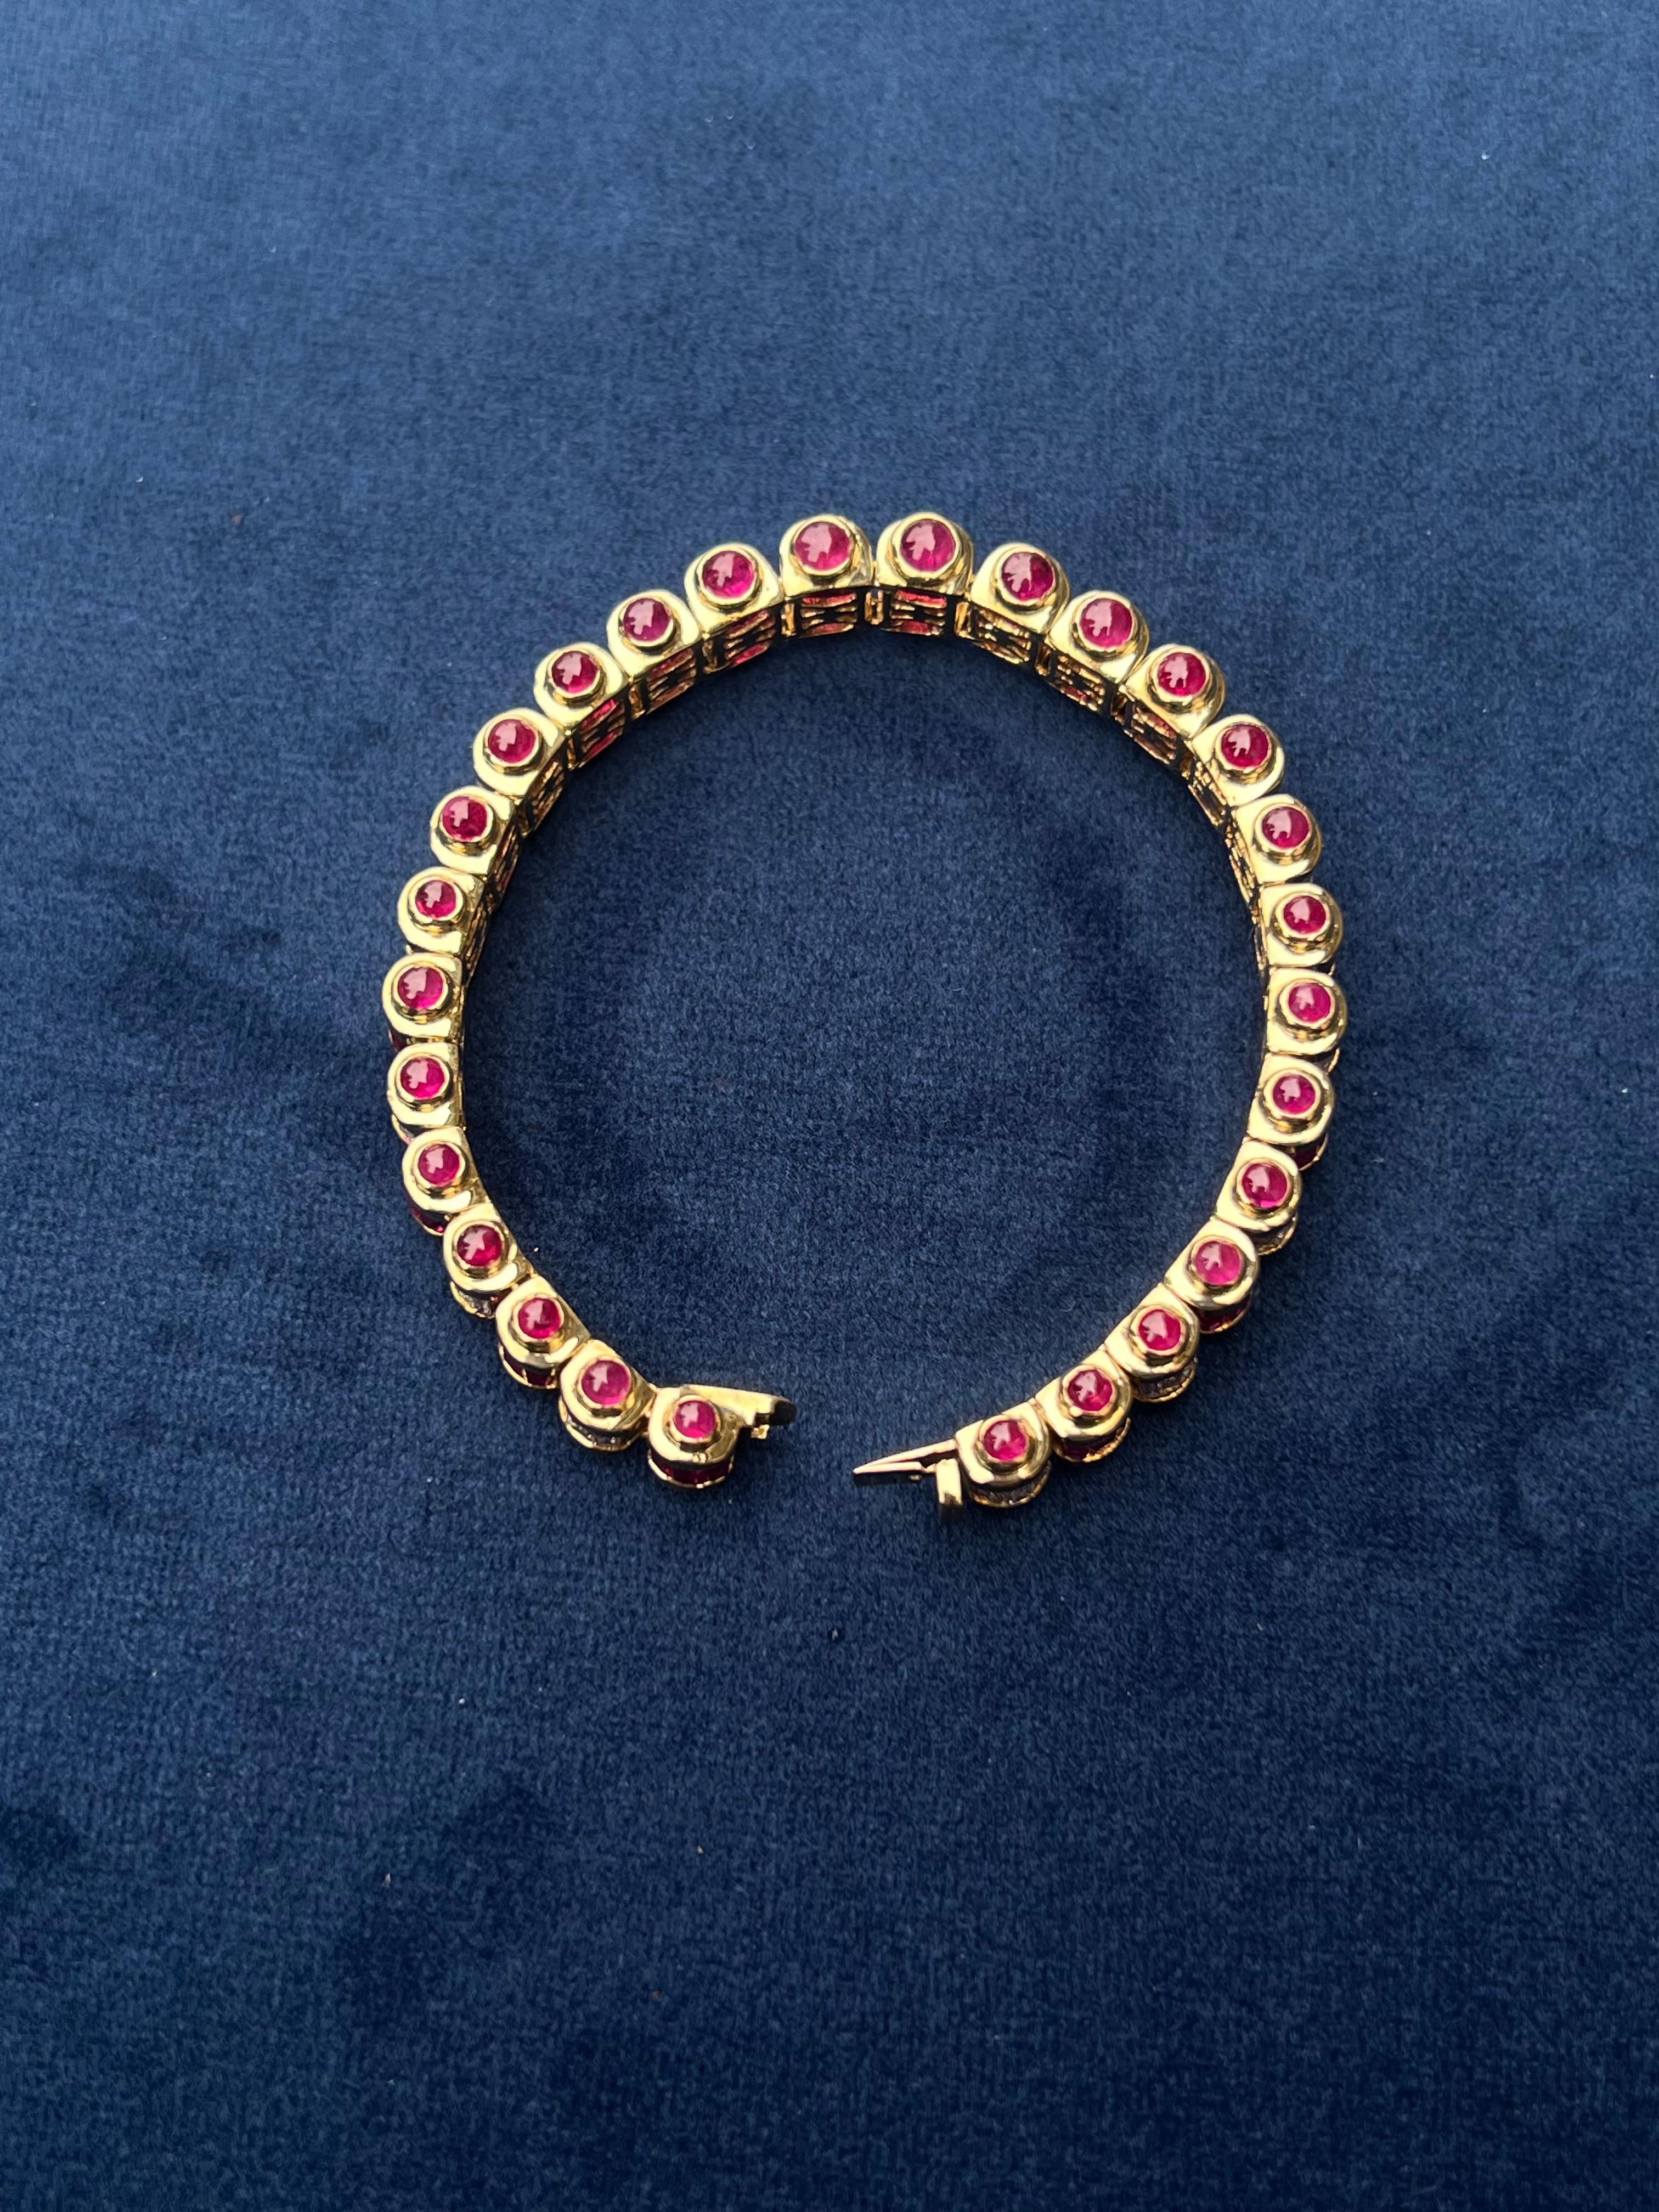 Very Regal 32 Carat Art Deco Style Burmese Ruby and Diamond Bracelet !8K Gold 3